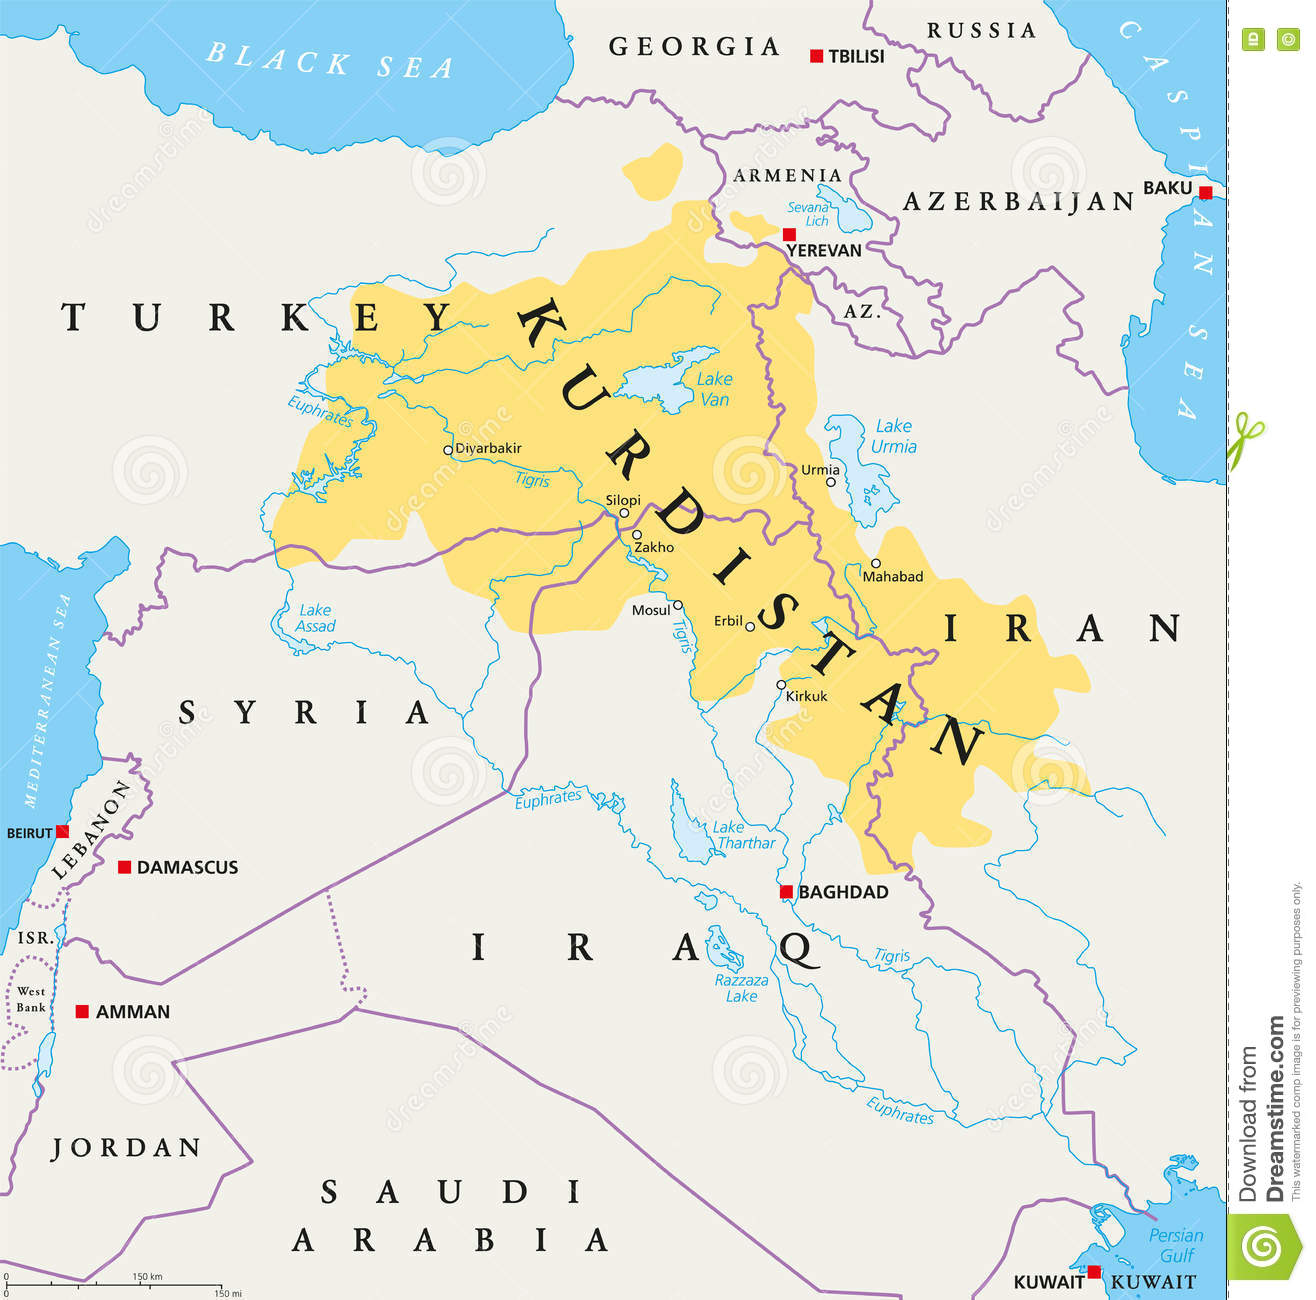 kurdistan-kurdish-lands-political-map-cultural-region-wherein-people-form-prominent-majority-greater-includes-74860412